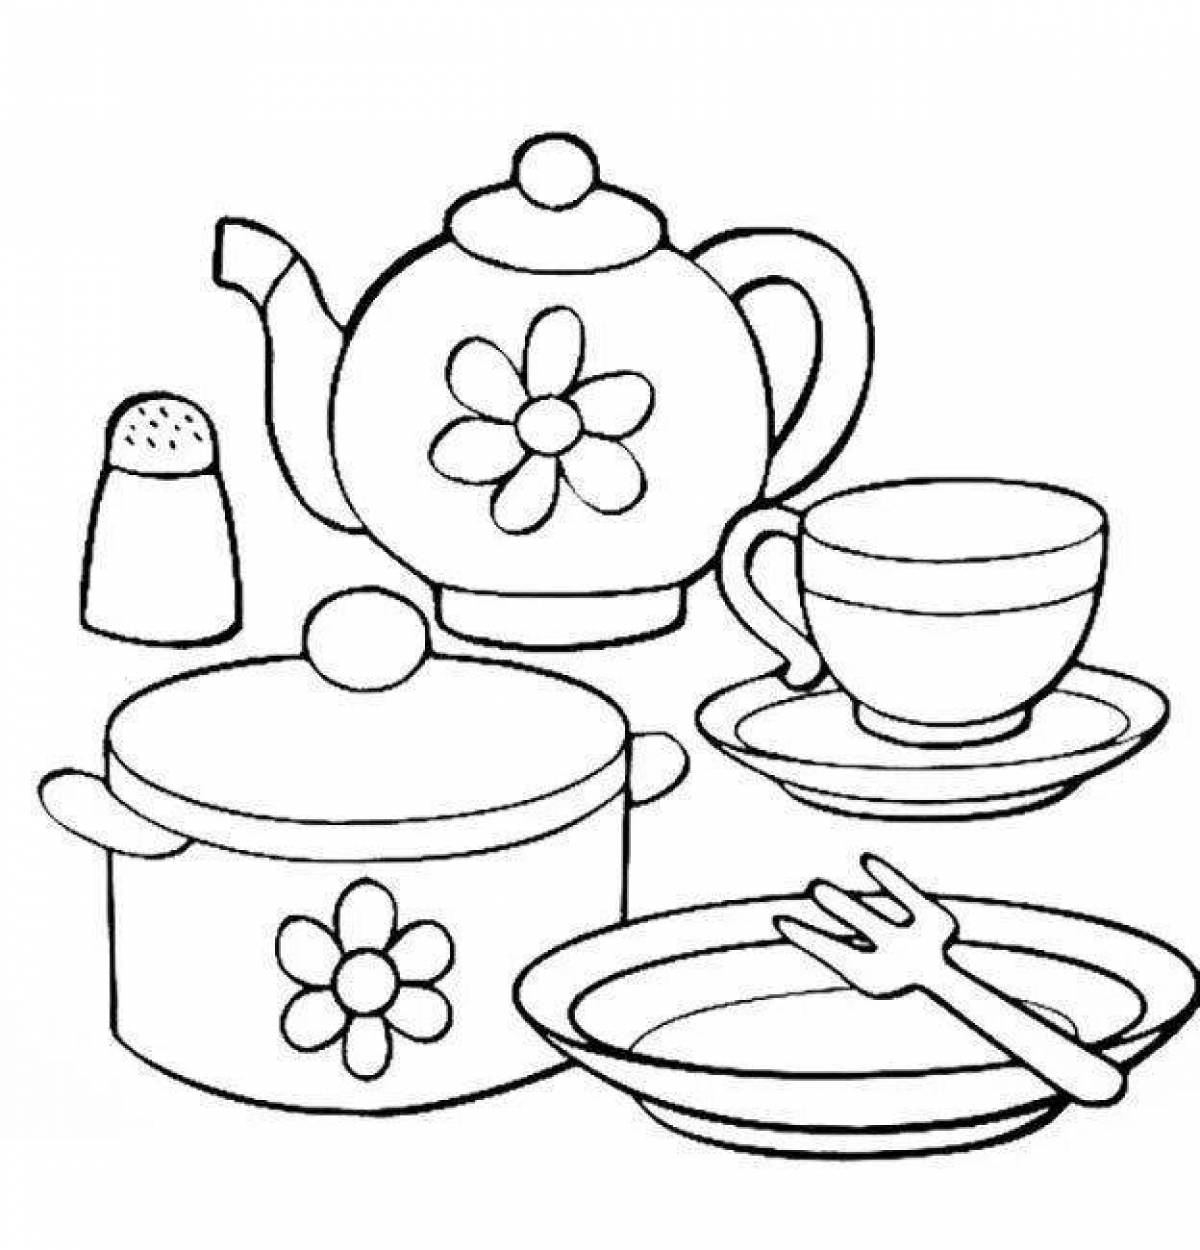 Coloring page refreshing tea set